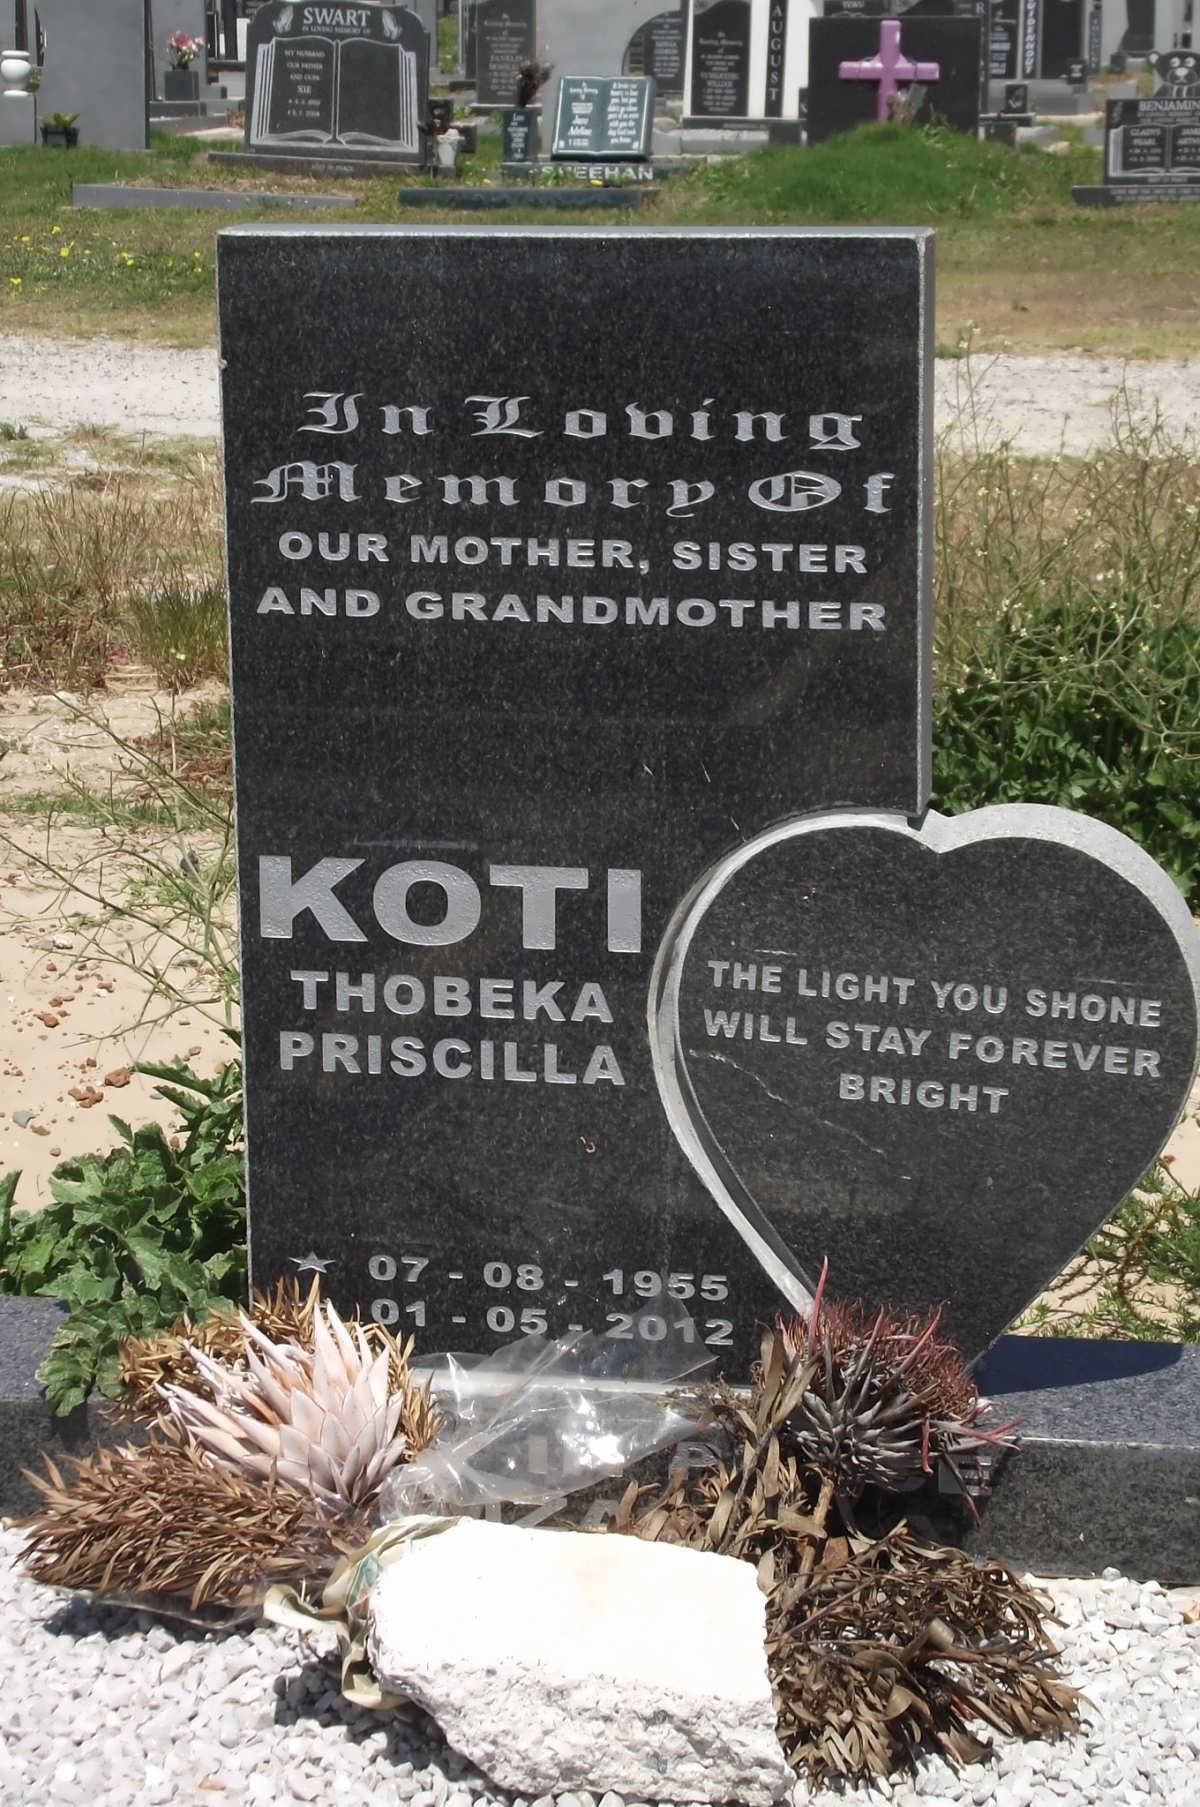 KOTI Thobeka Priscilla 1955-2012